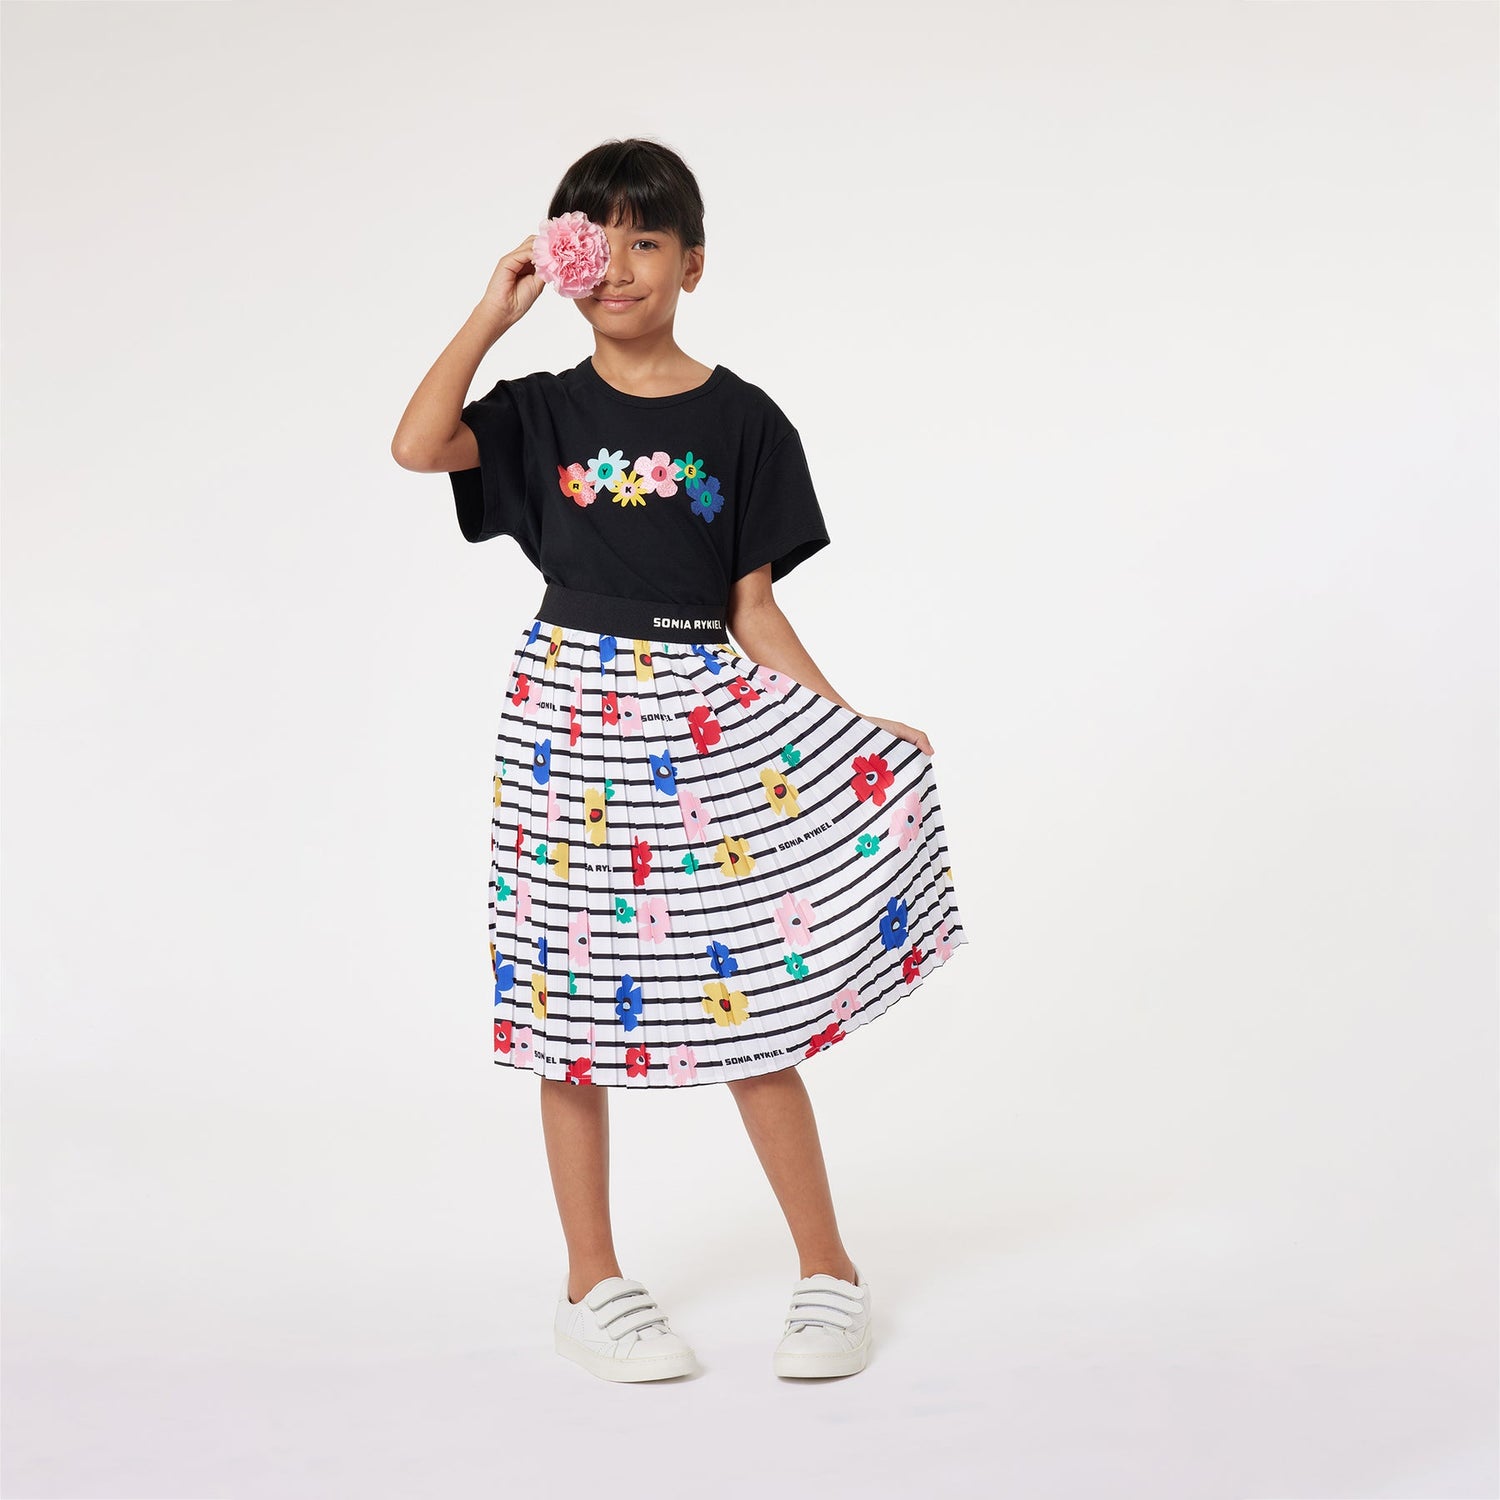 Sonia Rykiel White Striped and Flower Print Pleated Skirt